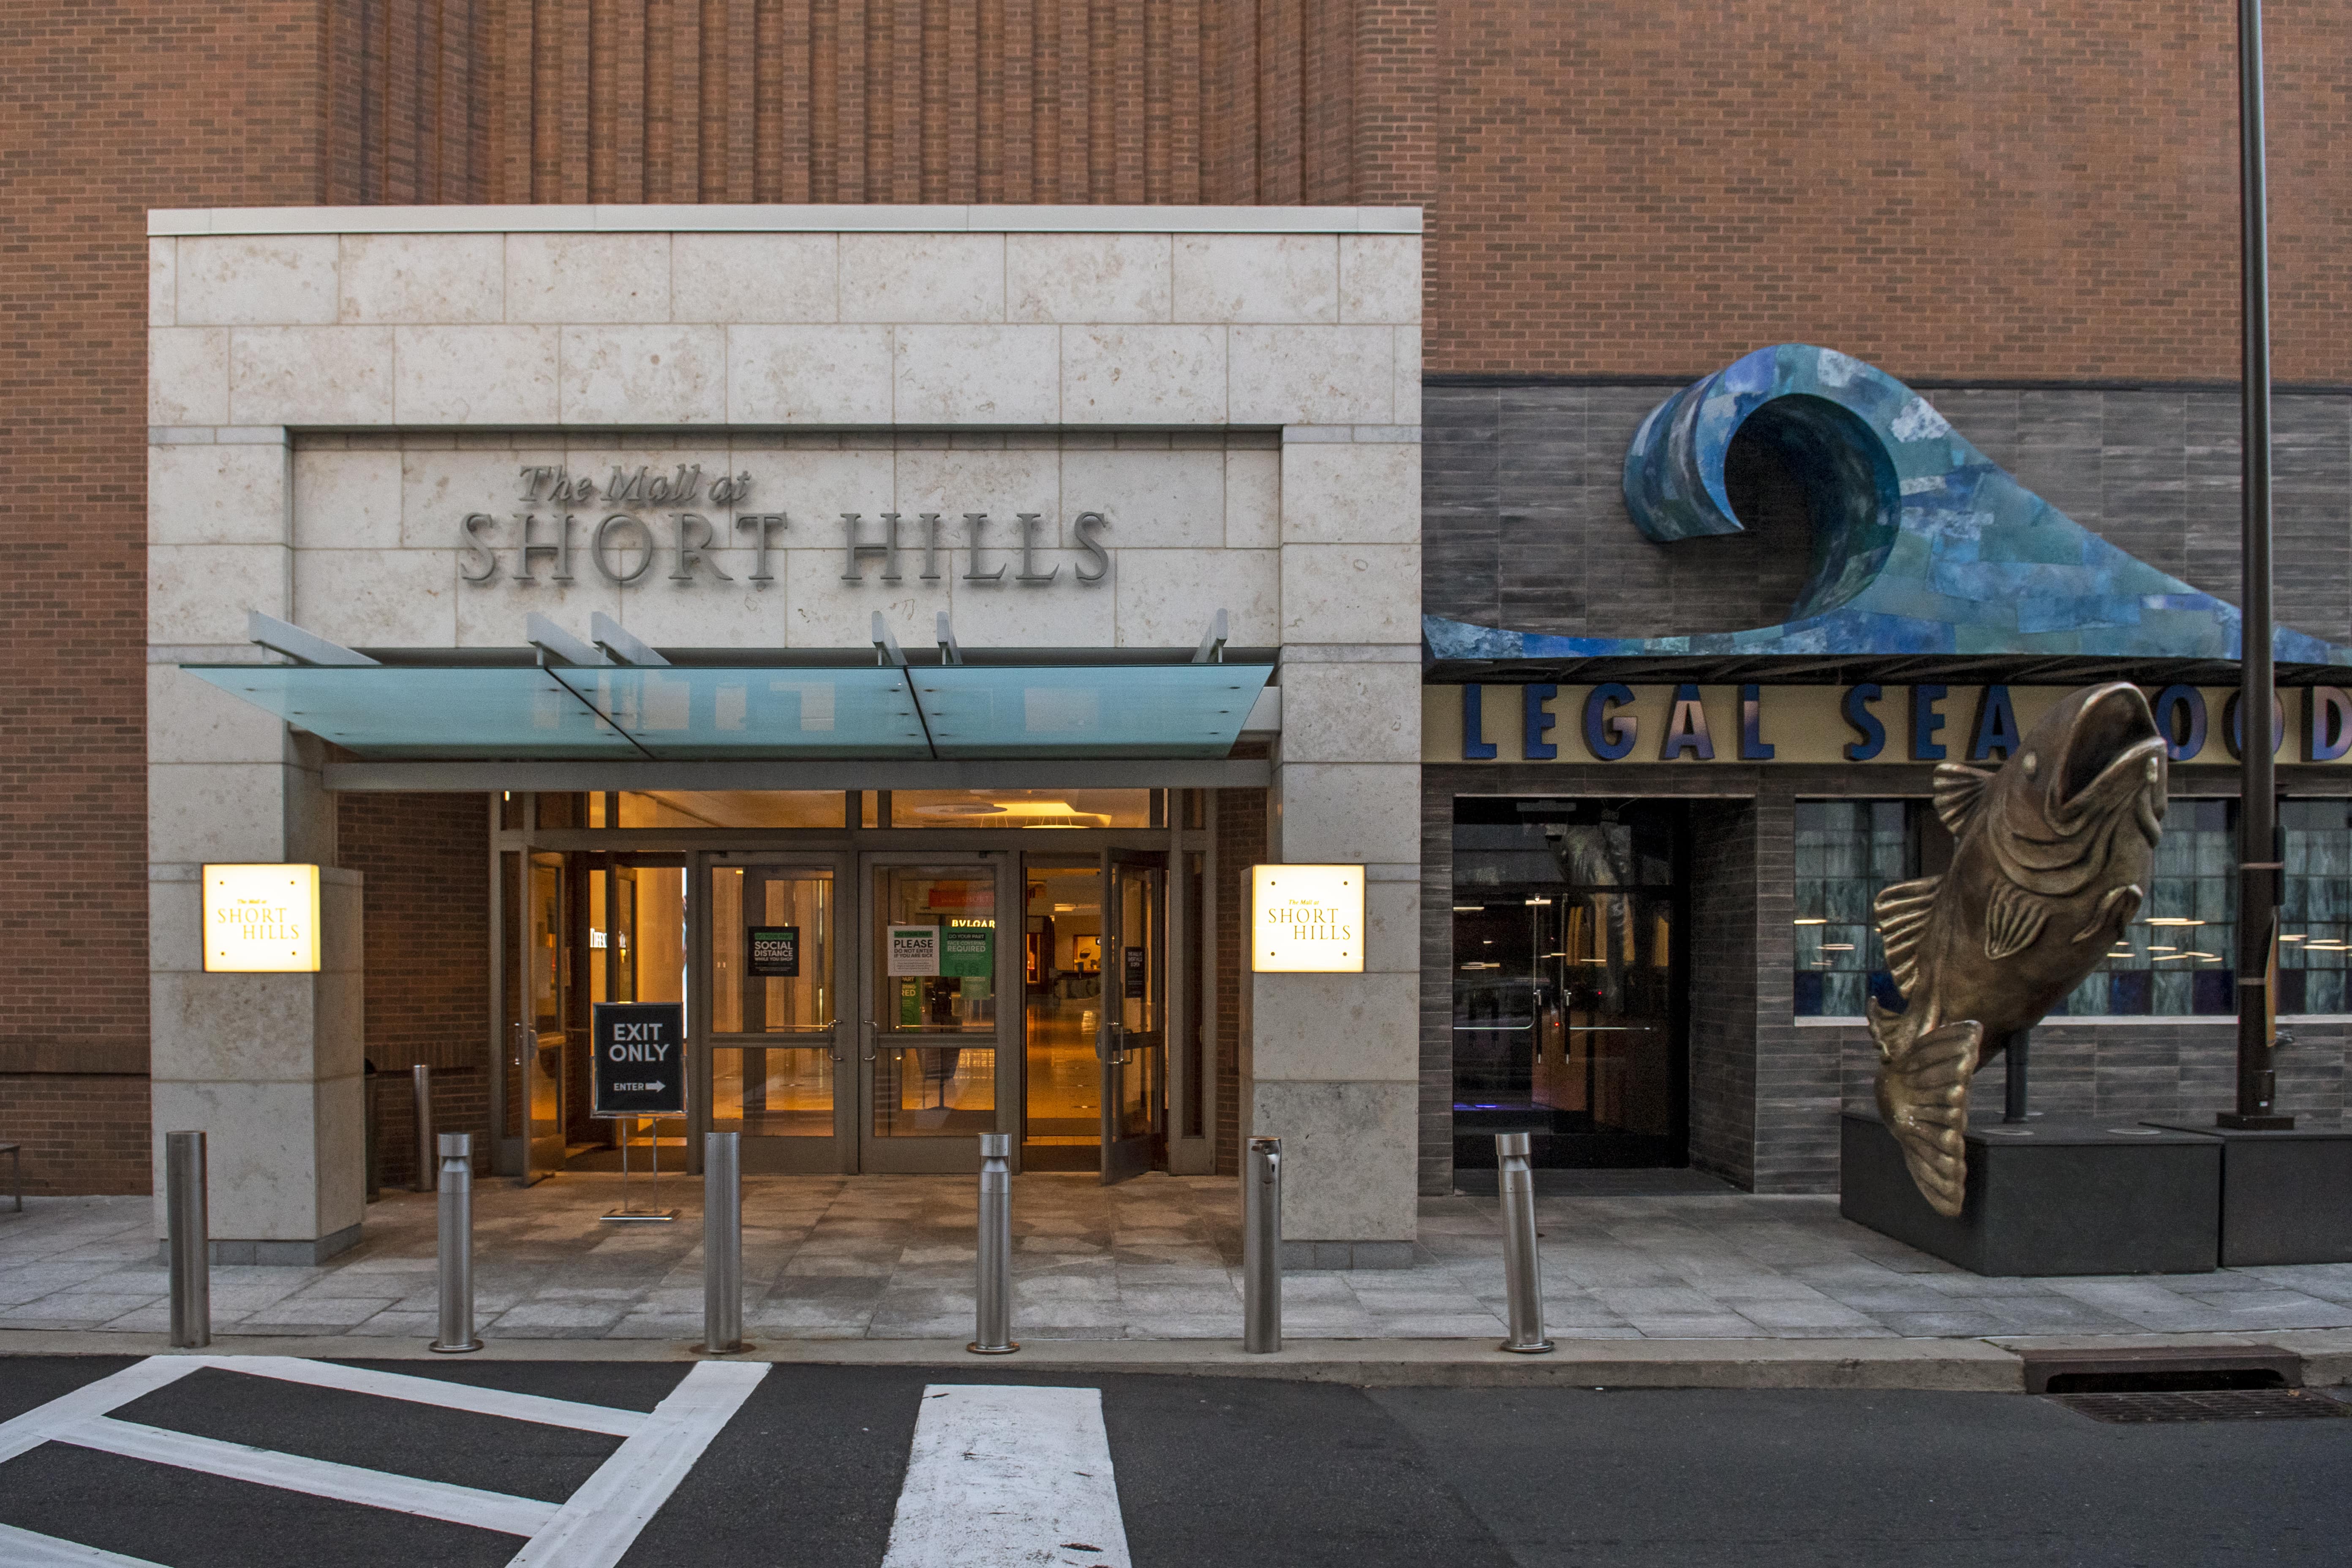 Short Hills - The Mall at Short Hills - Legal Sea Foods